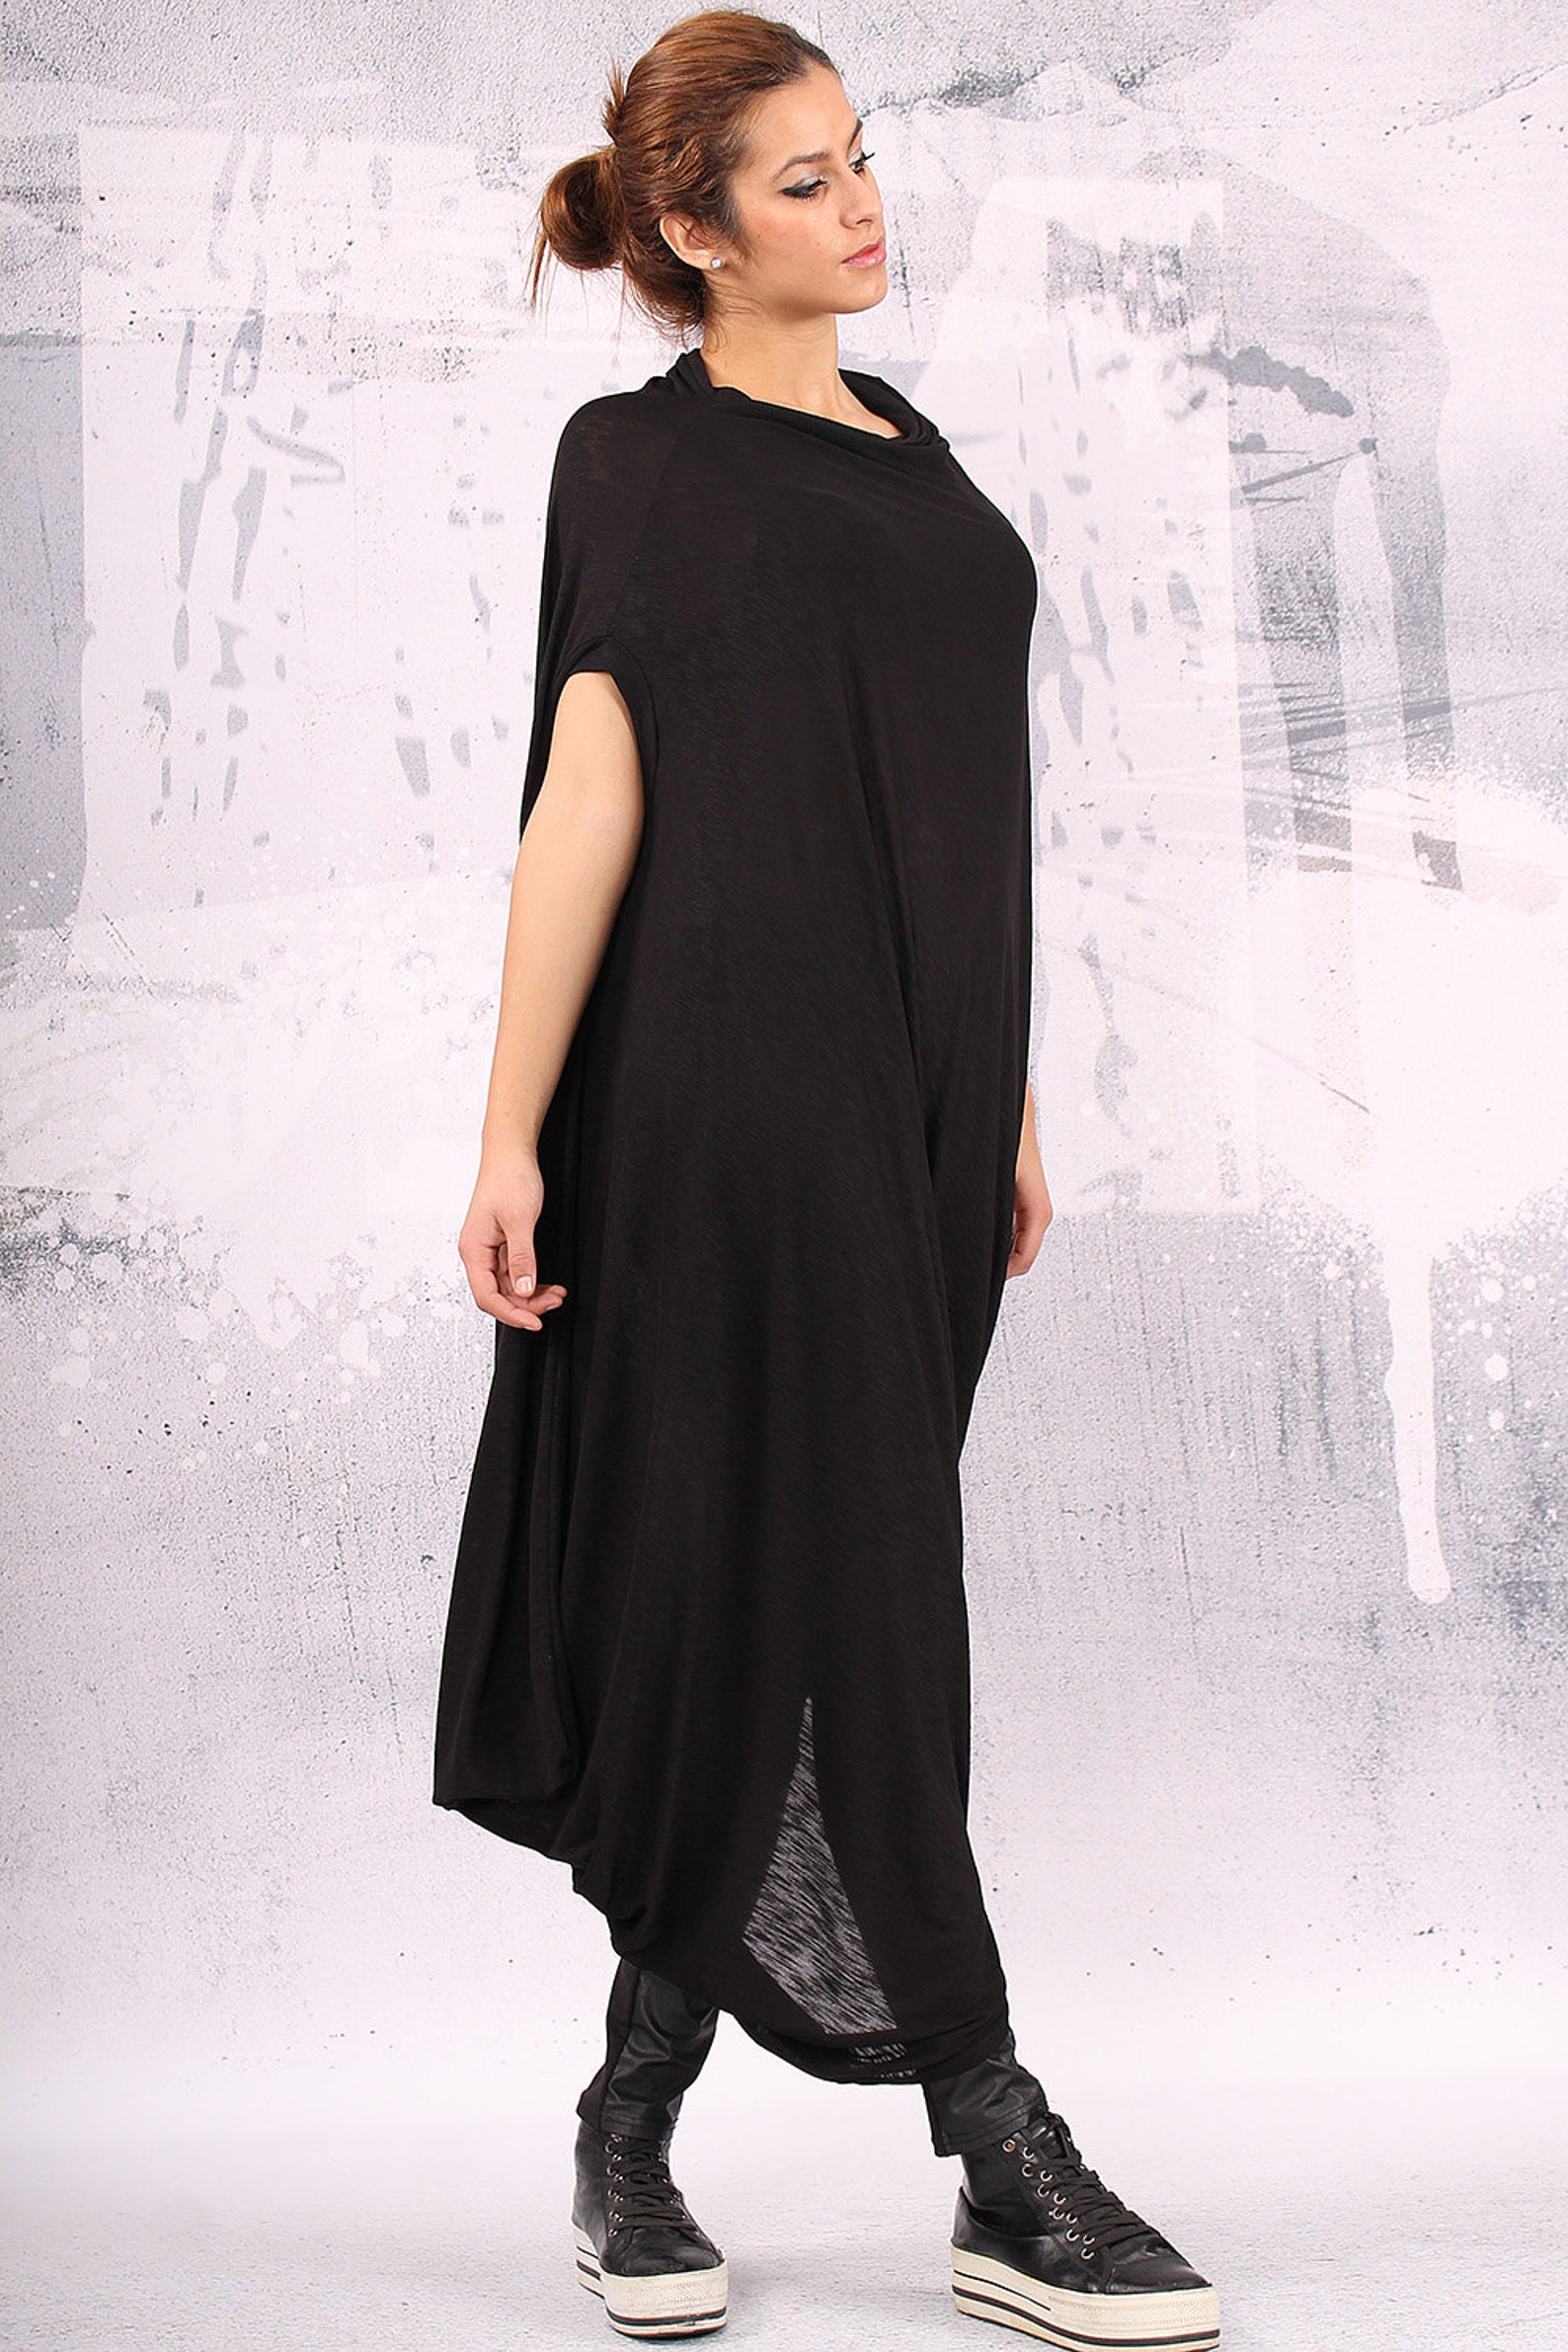 Black Extravagant Asymmetrical Tunic Dress Plus Size Tunic - Etsy